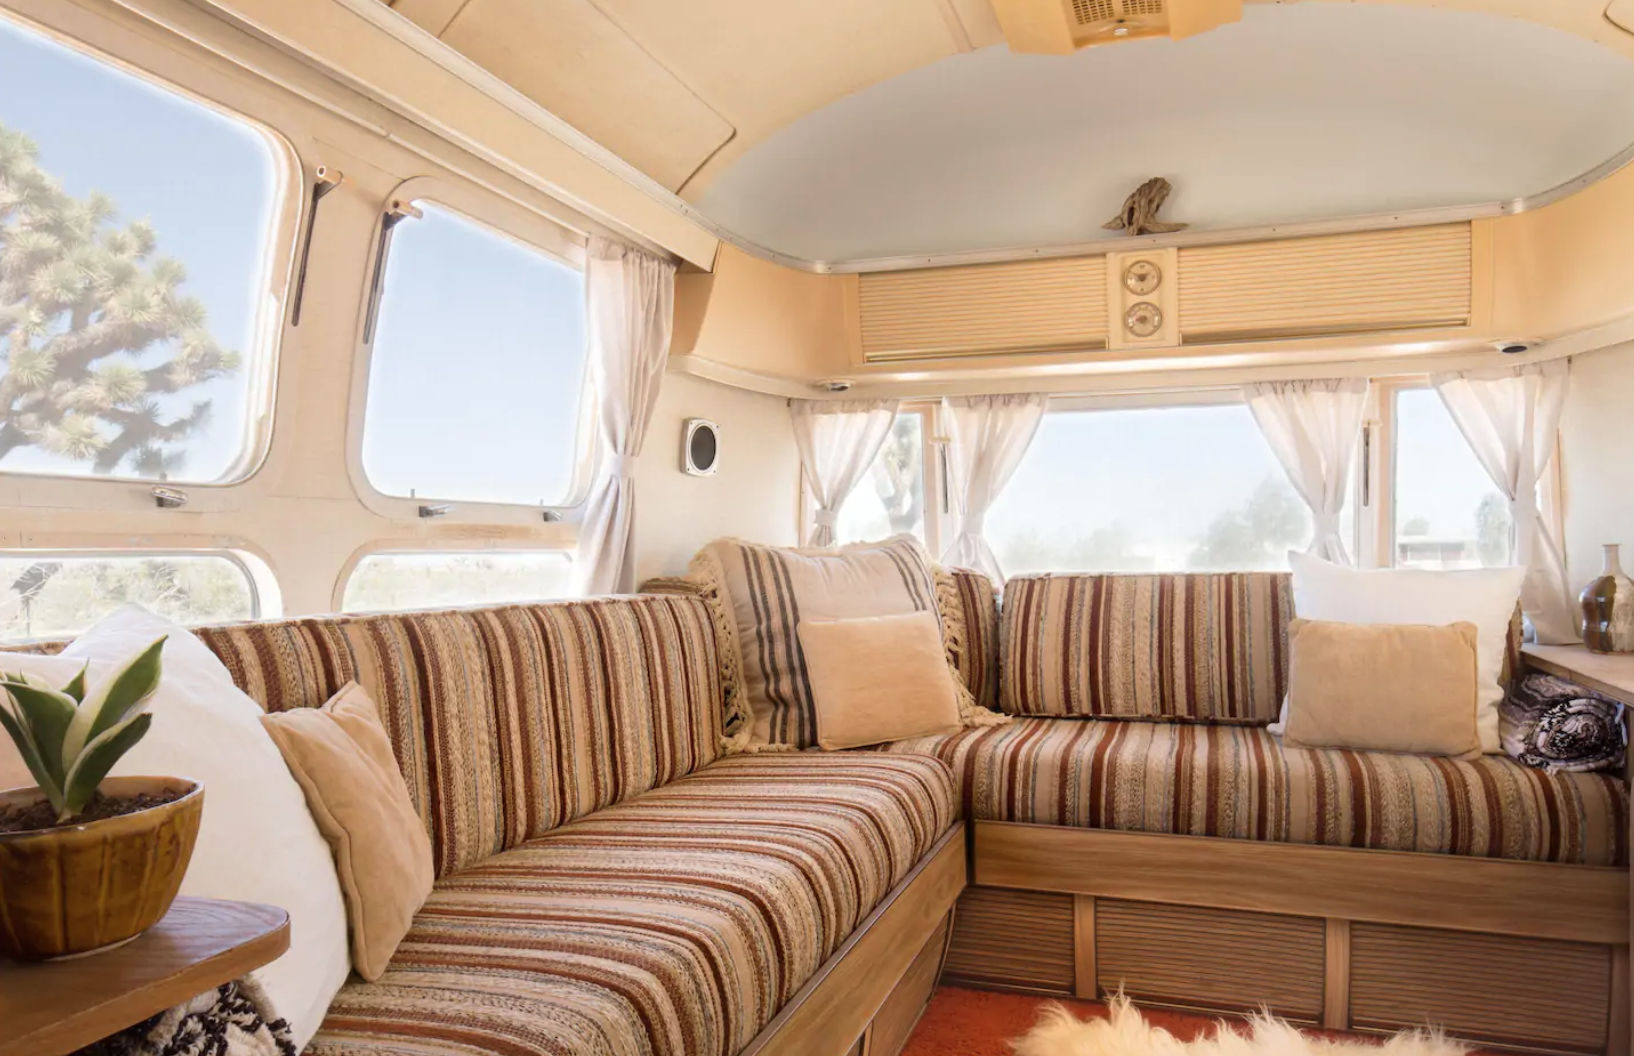 Airstream glamping airbnb california